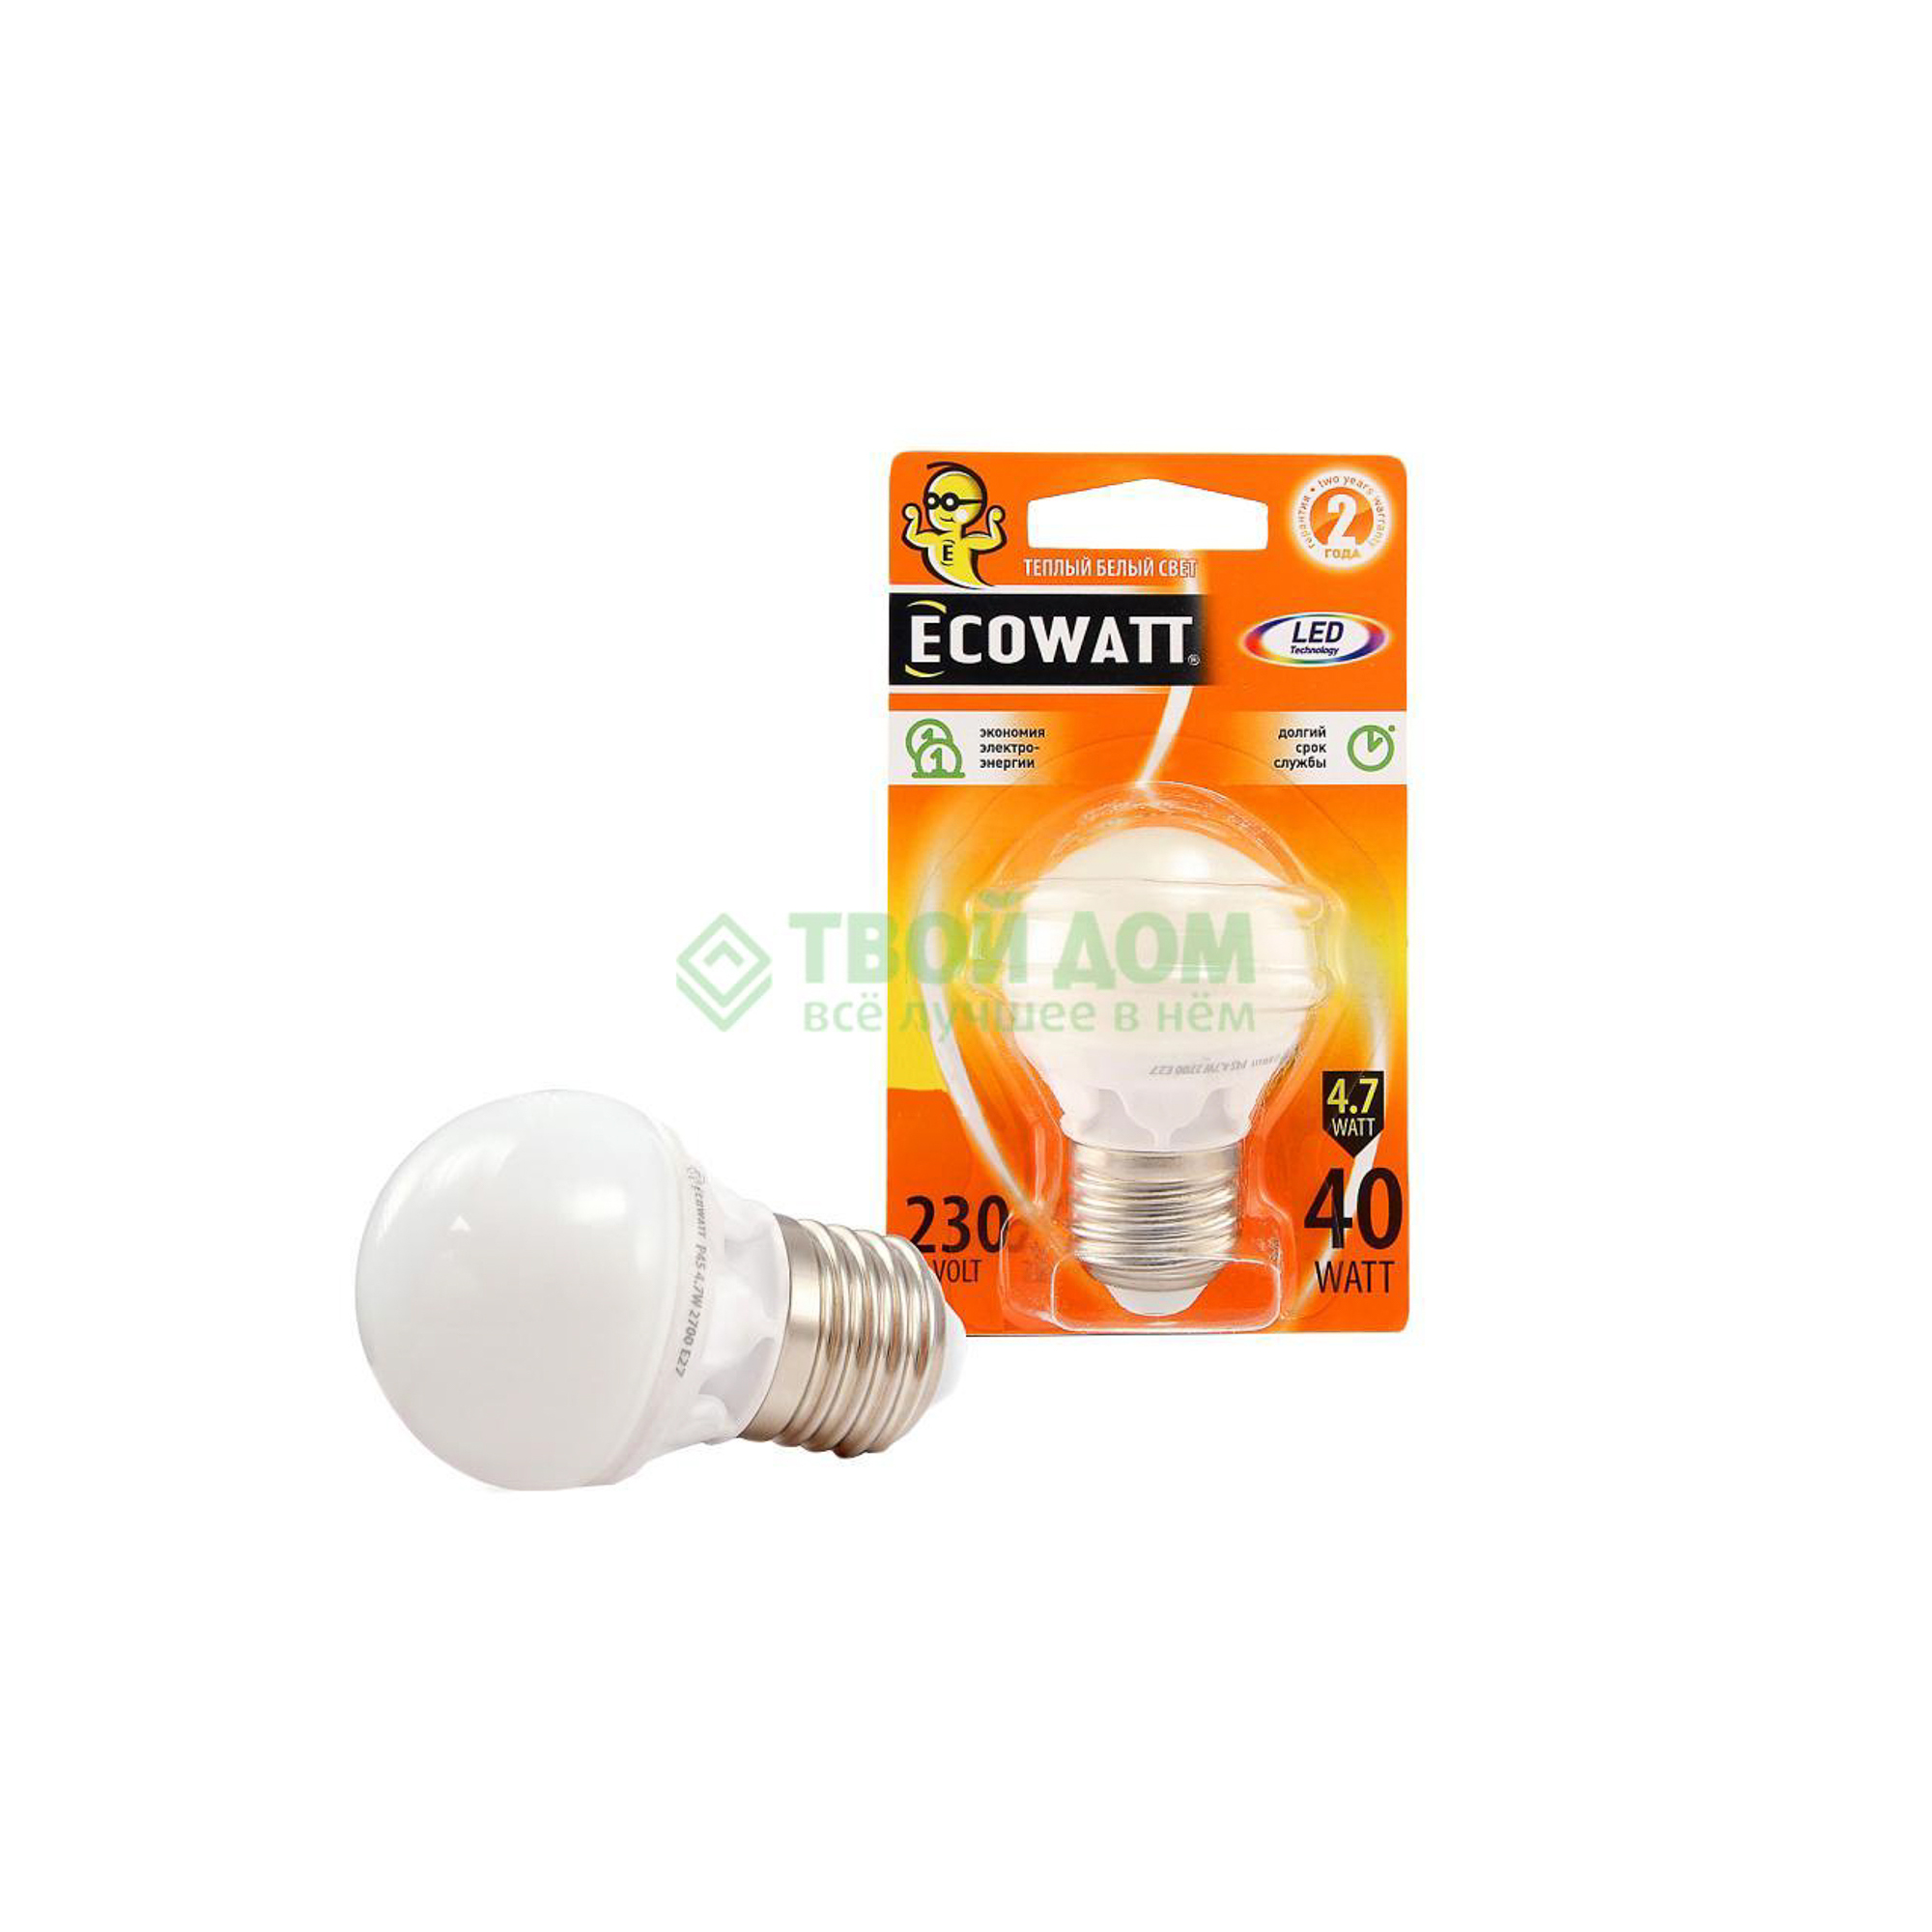 Лампочка Ecowatt P45 230В 4.7(40)W 2700K E27